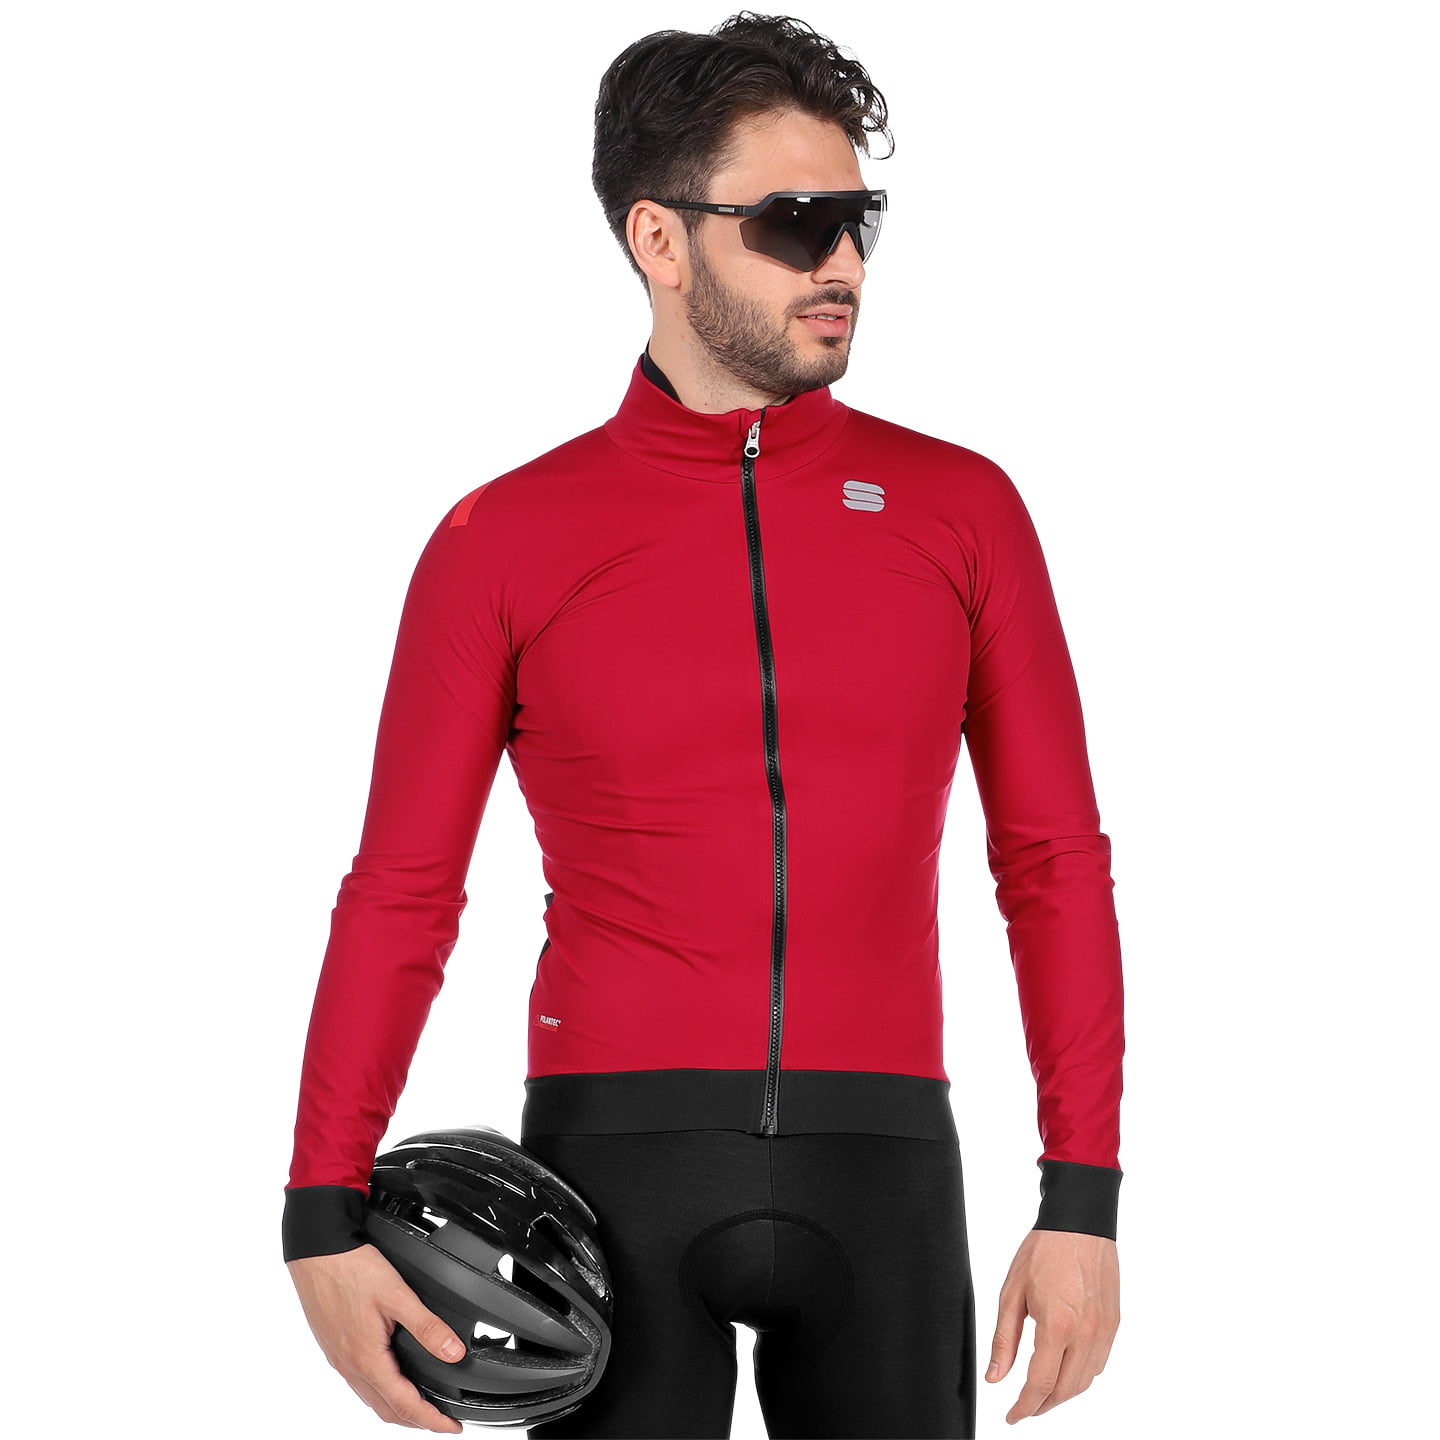 SPORTFUL Fiandre Pro Cycling Jacket Cycling Jacket, for men, size M, Bike jacket, Cycling clothing